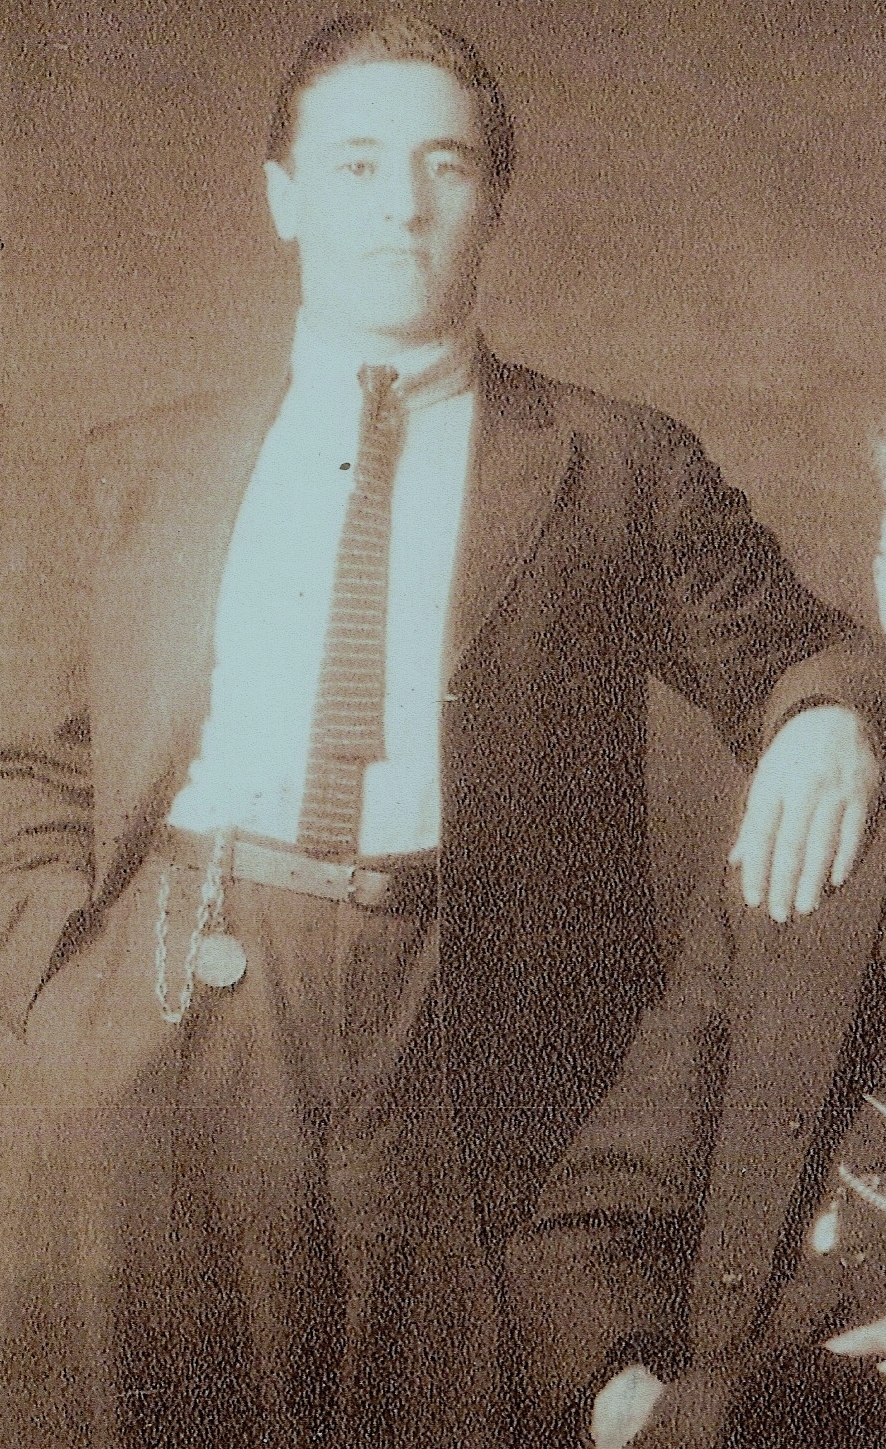 Carl Jesmer about 1915